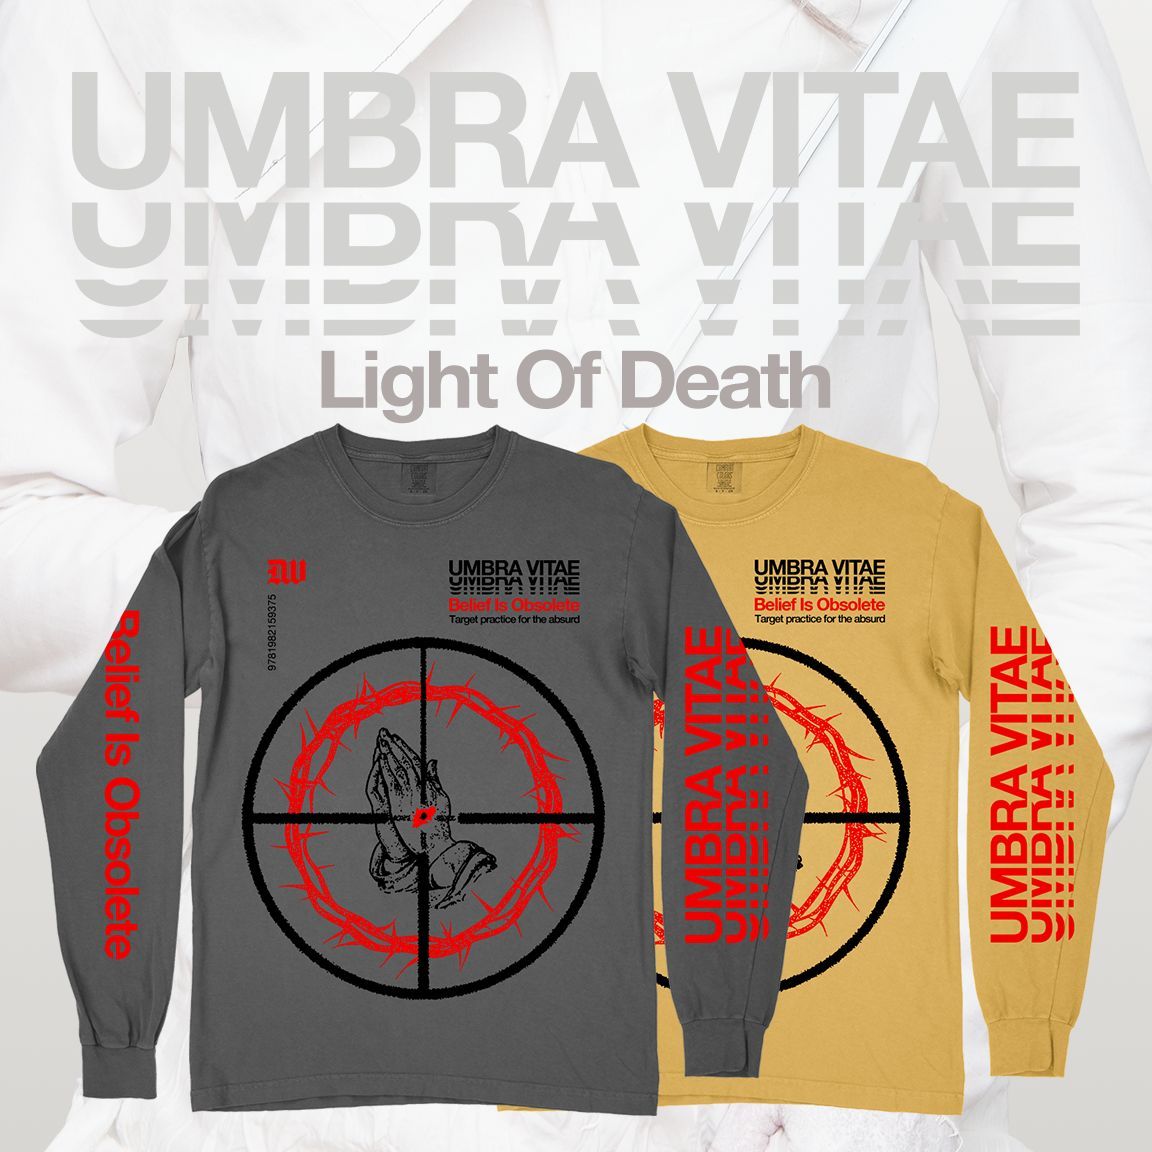 Umbra Vitae 'Light Of Death' out June 7th 🔪 Music & Merch: umbravitae.com Art Direction & Design by J. Bannon #UmbraVitae #LightOfDeath #DeathwishInc #DeathwishEurope